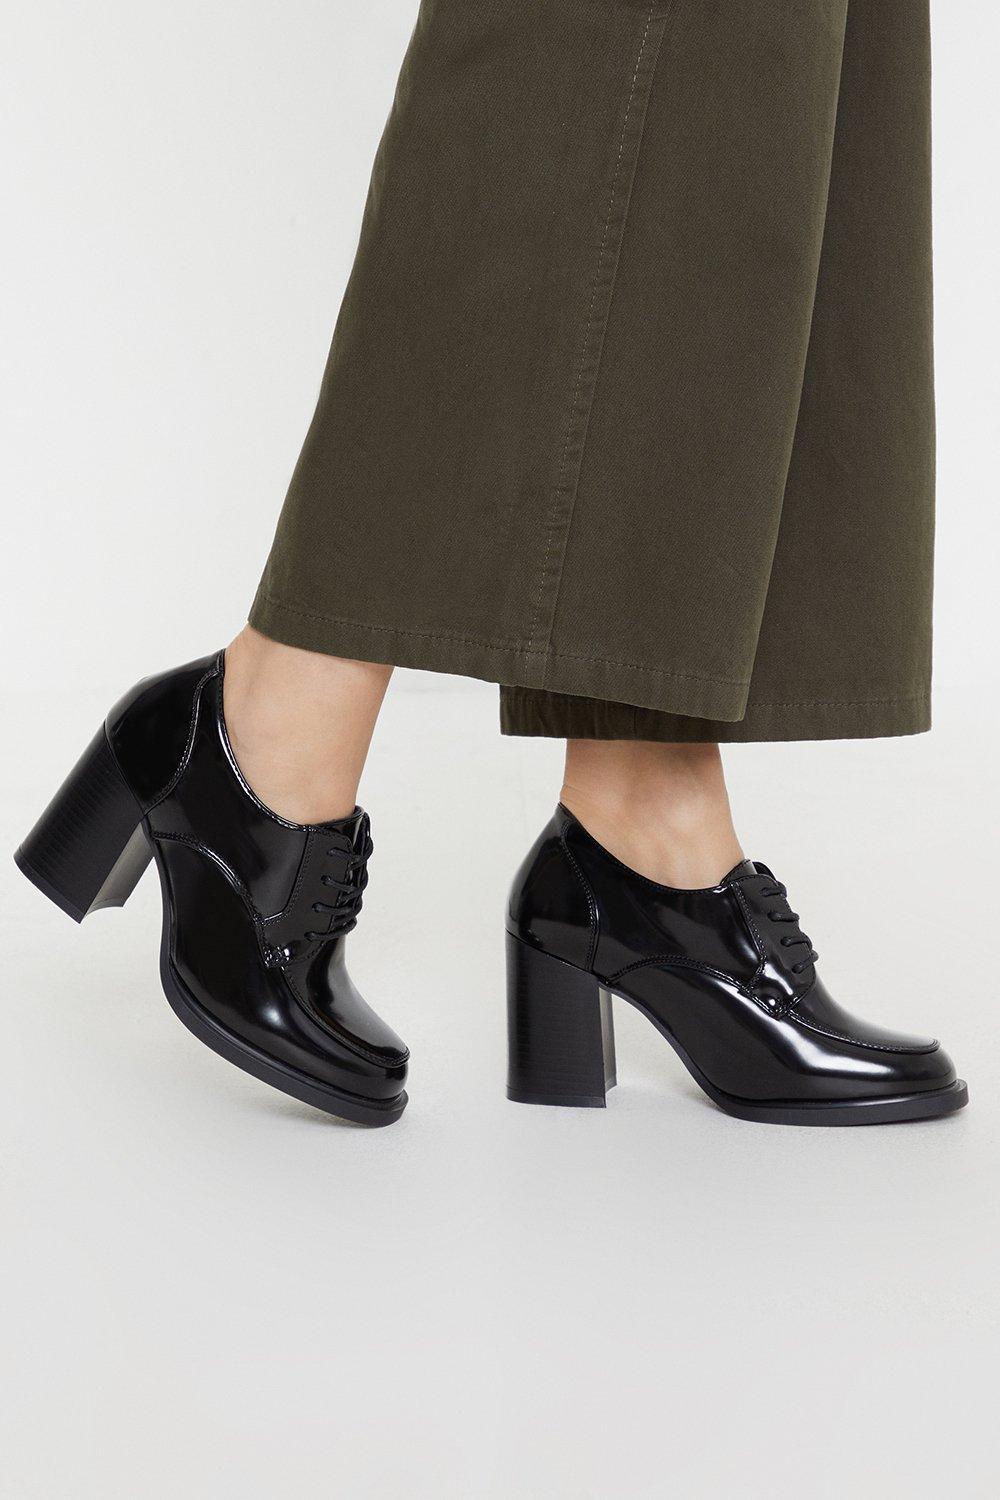 Women’s Principles: Lara Front Lace Up High Block Heel Shoe - true black - 5